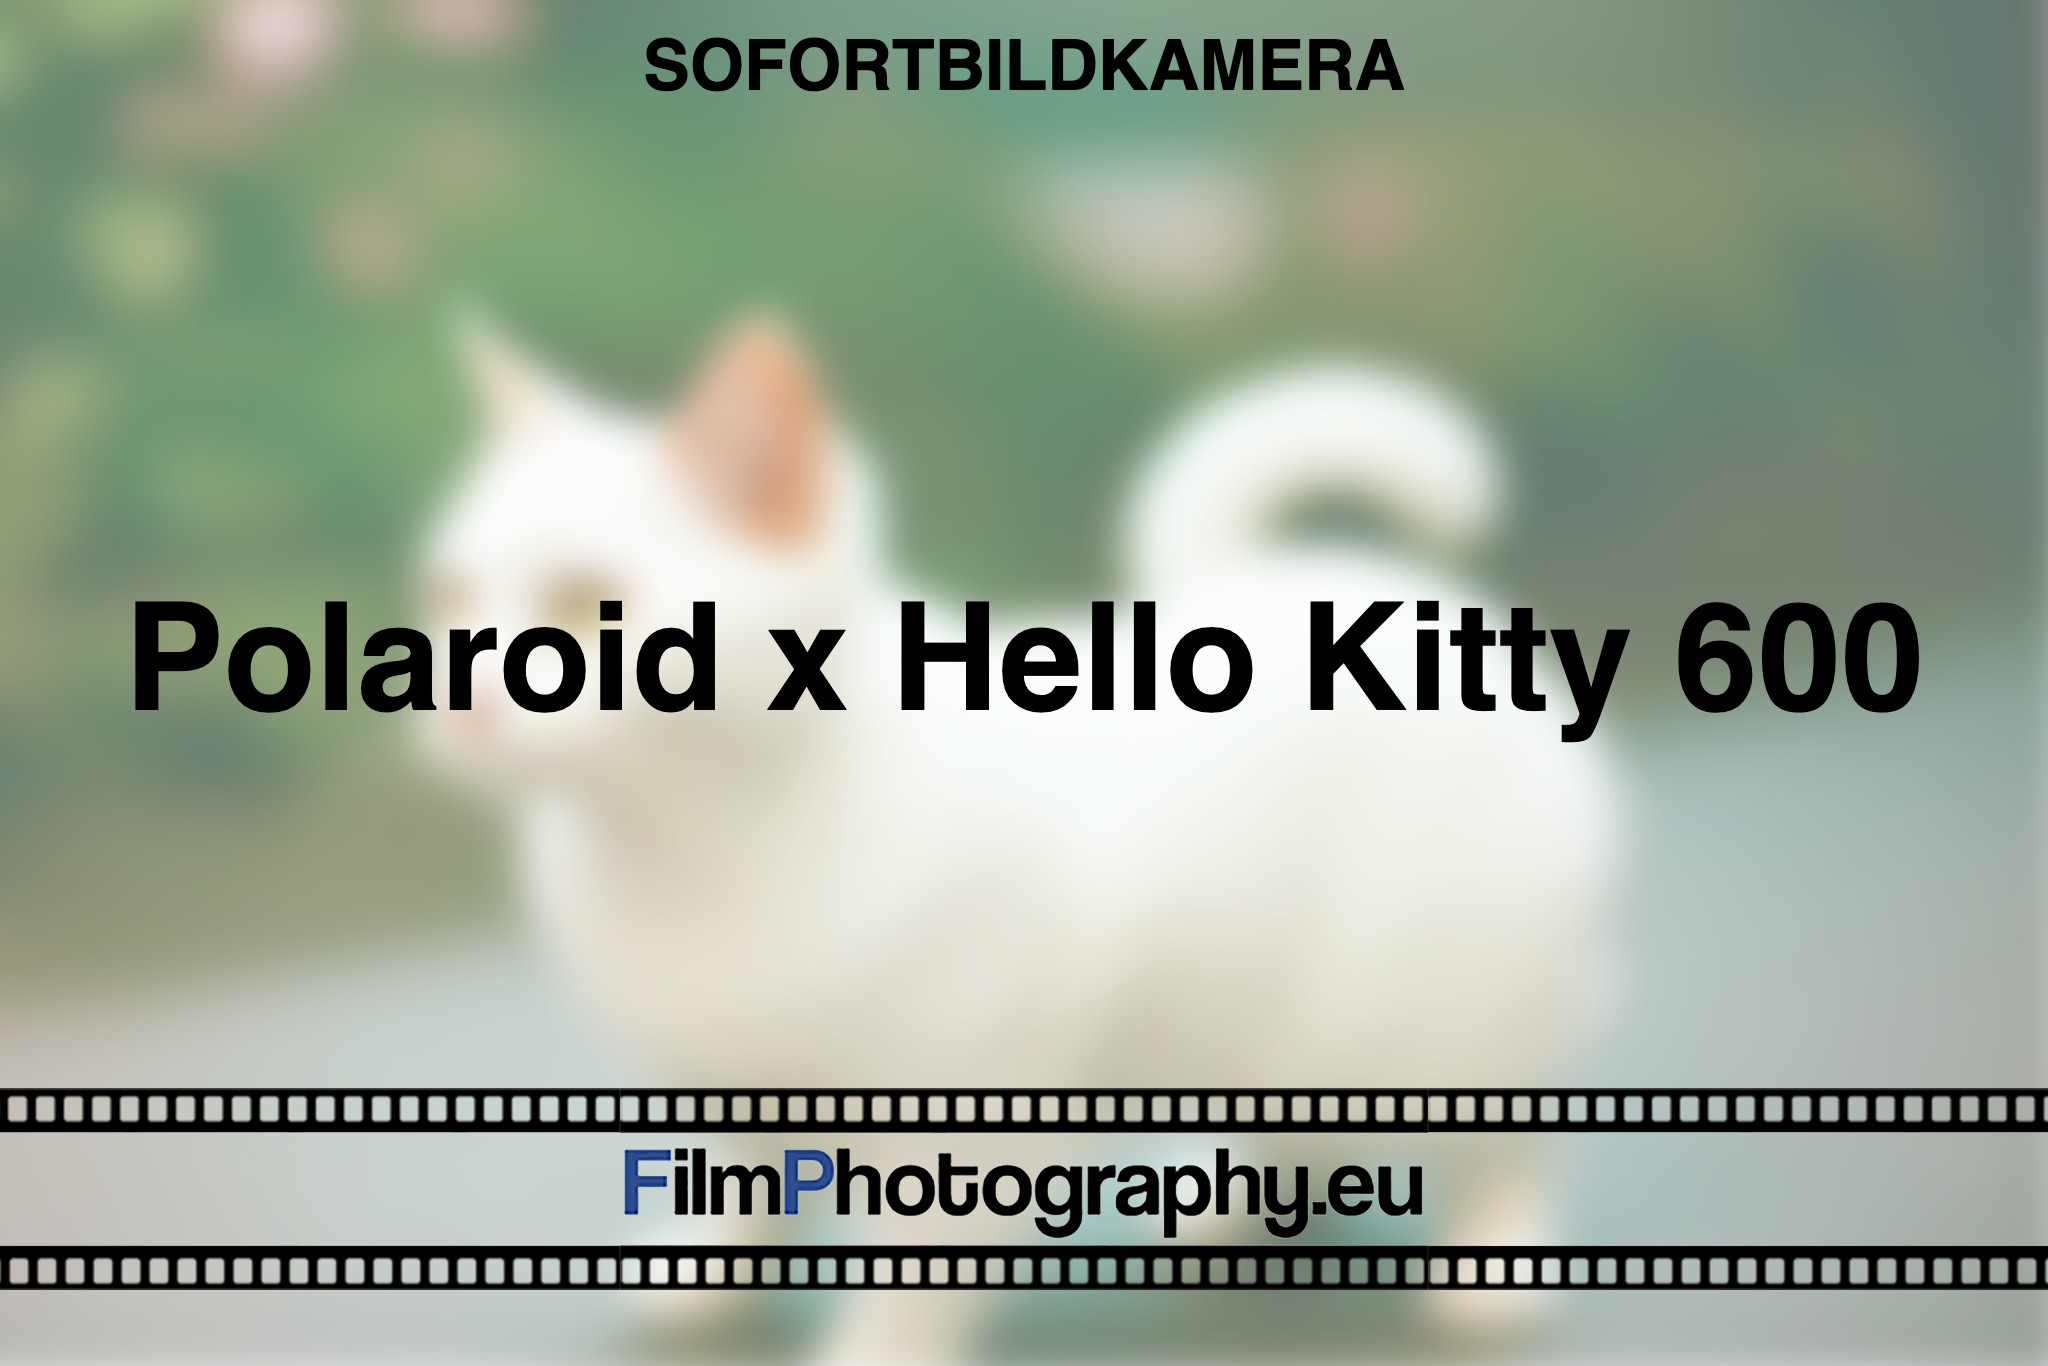 polaroid-x-hello-kitty-600-sofortbildkamera-fp-bnv